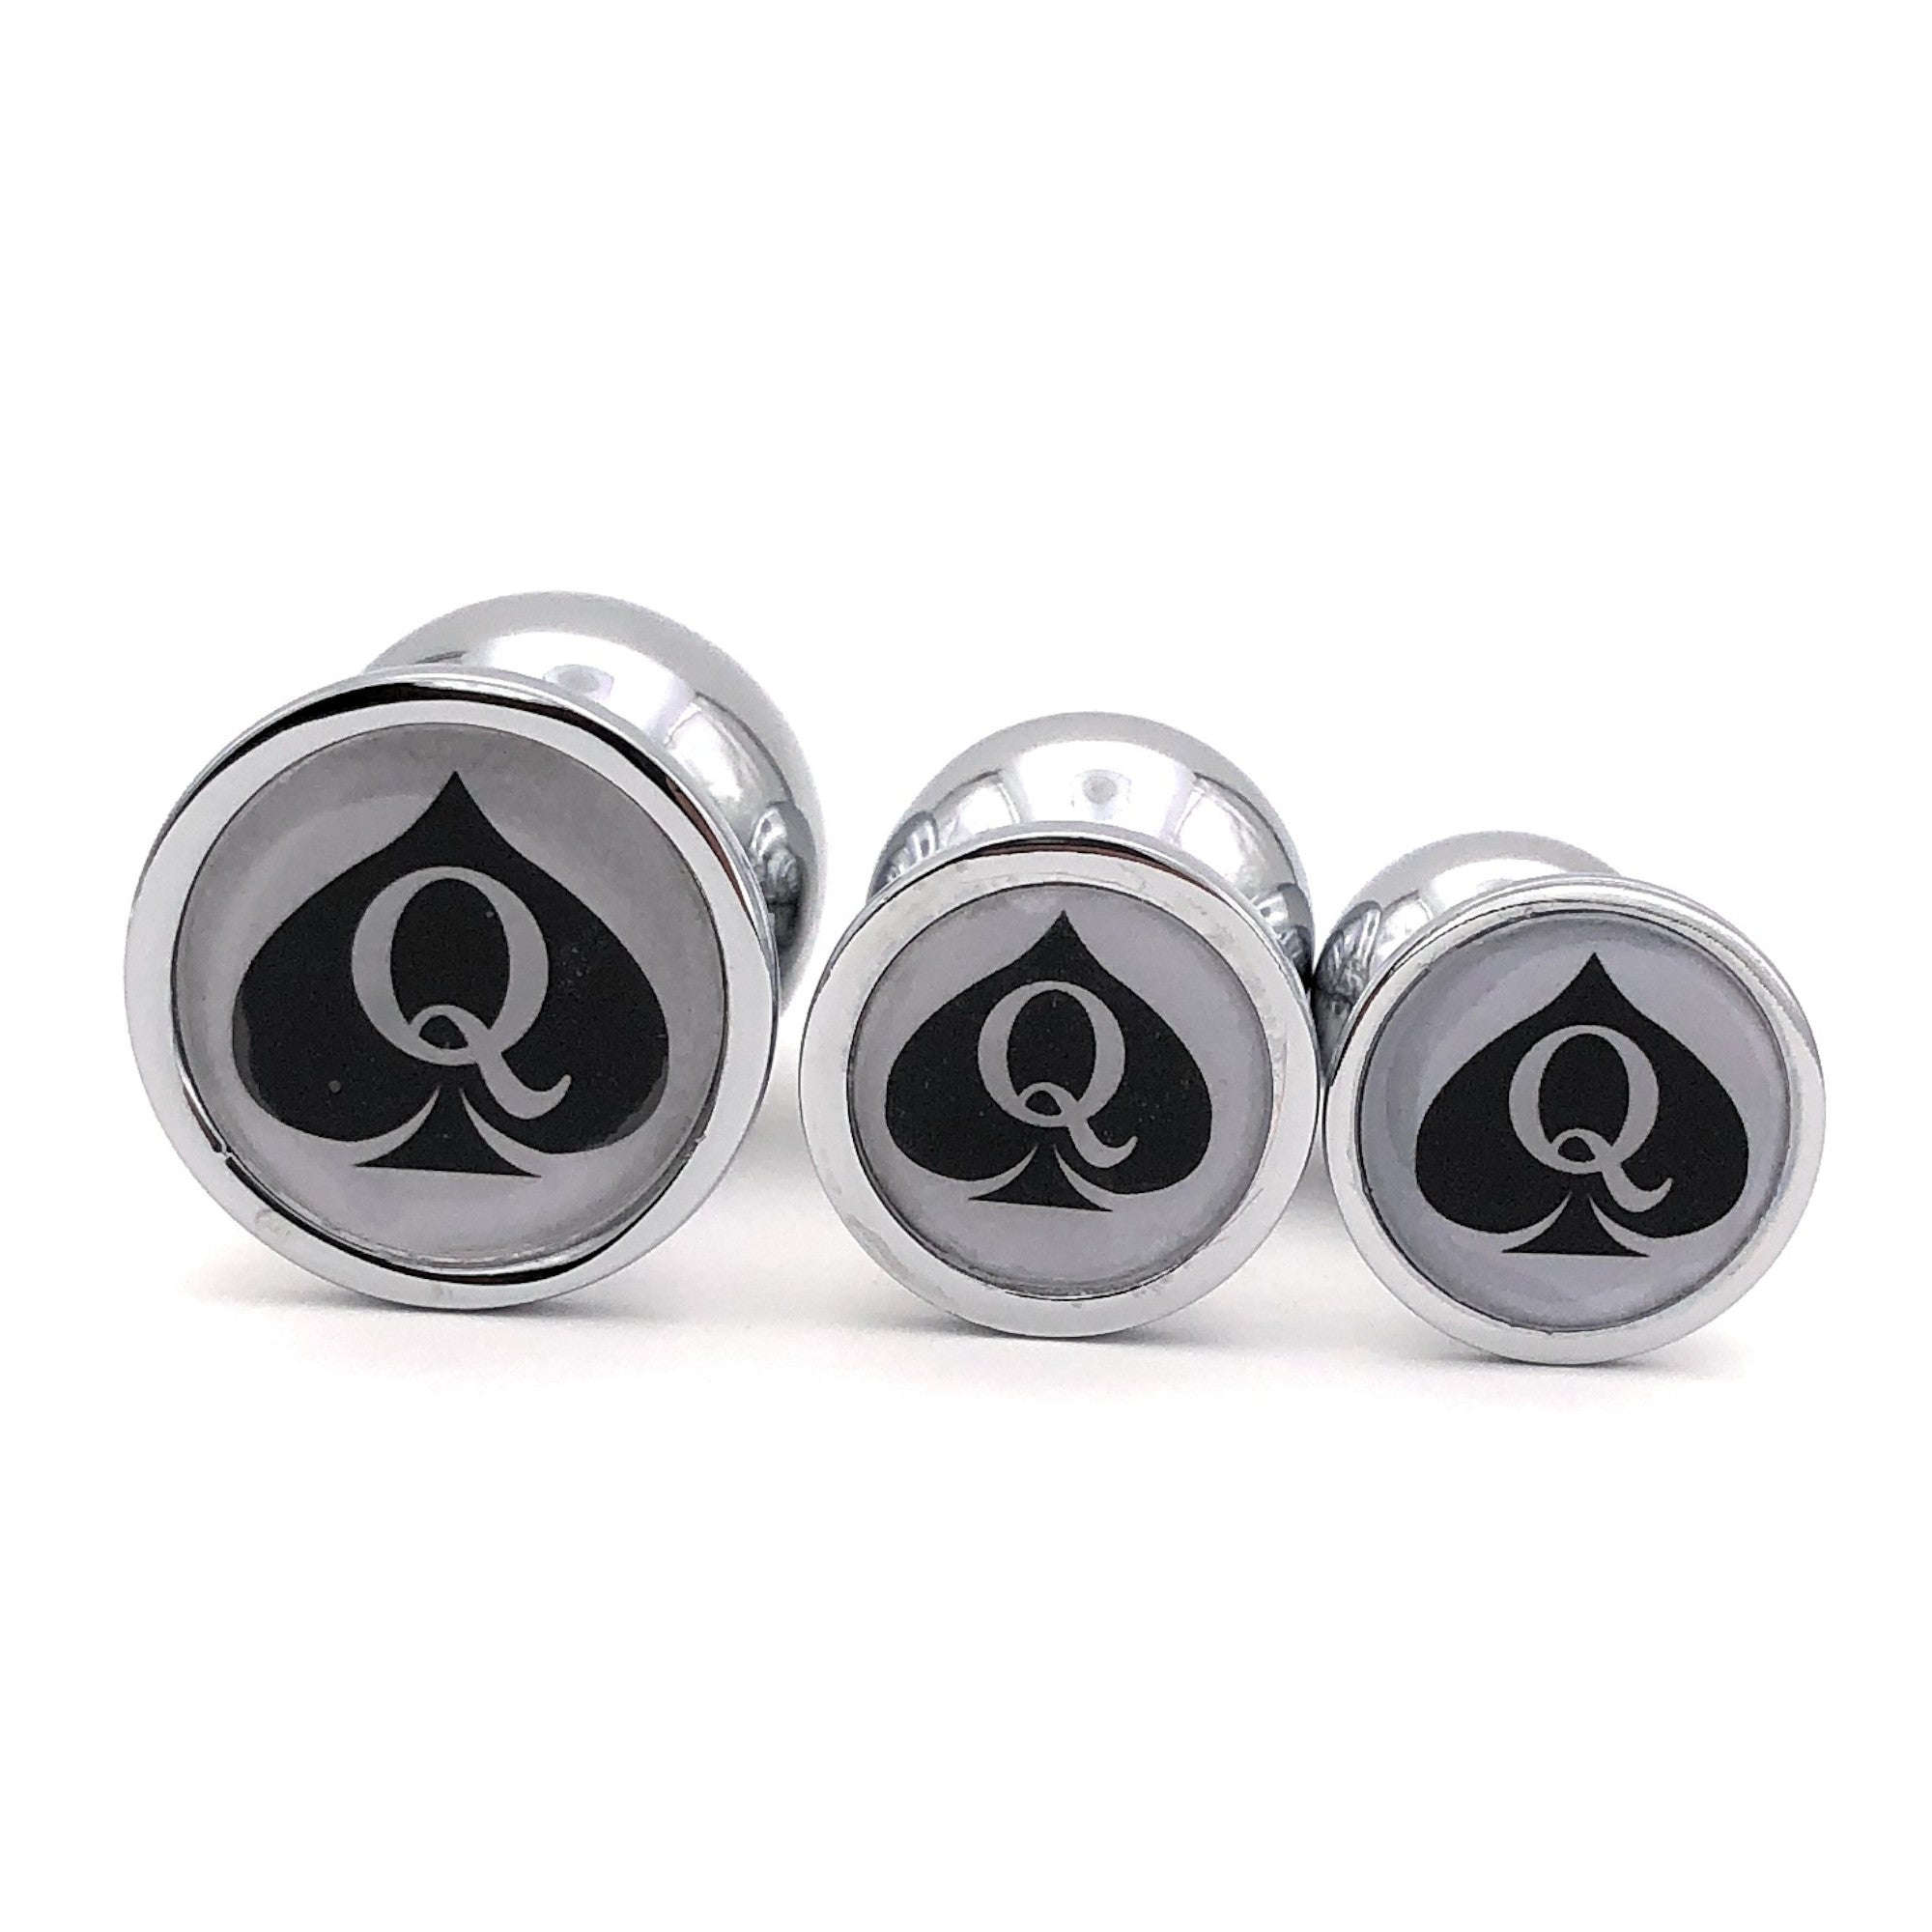 Queen Of Spades - Q & Spade shaped Silver Anal Butt Plug